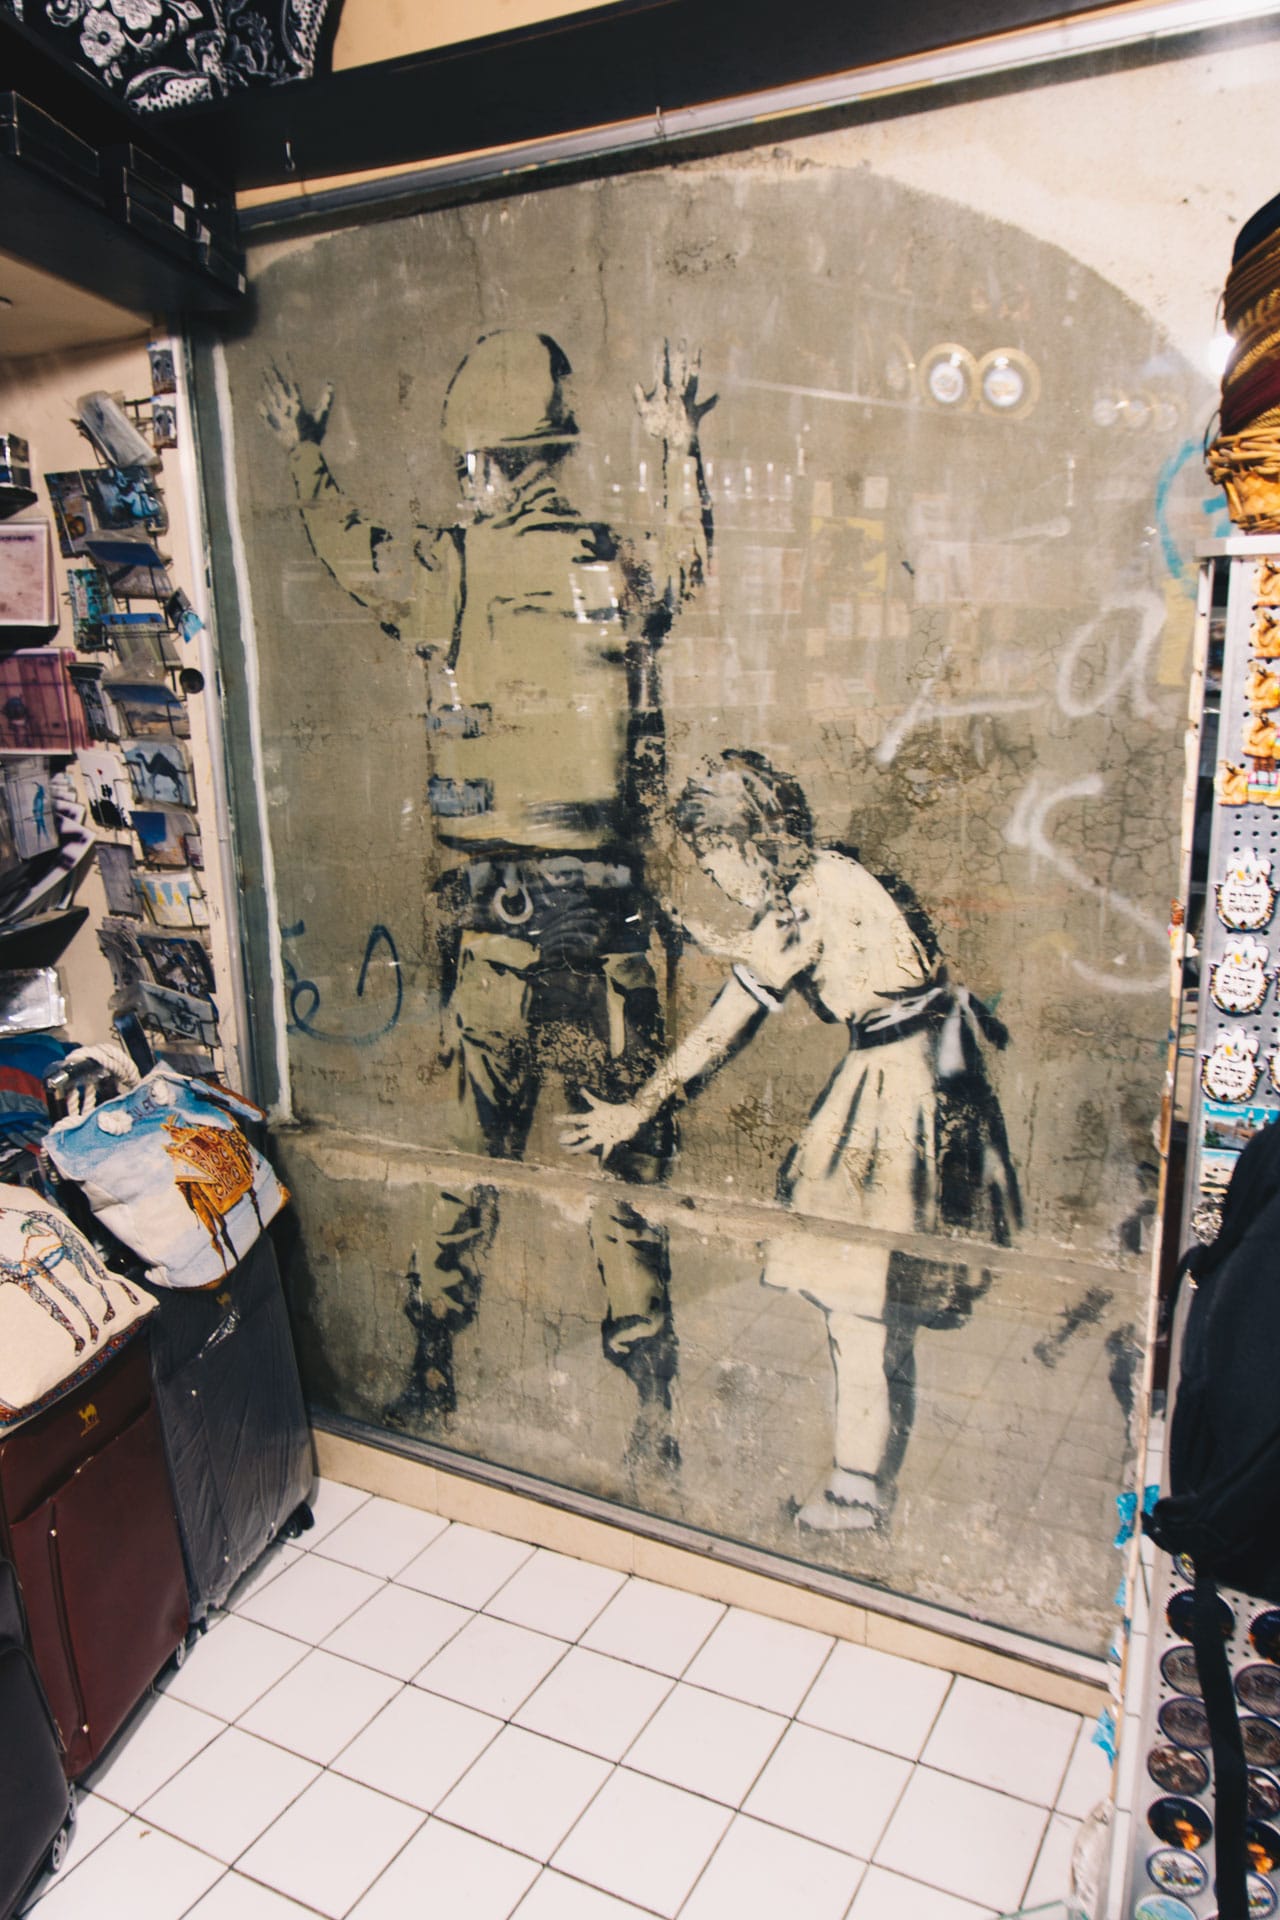 Banksy w Betlejem